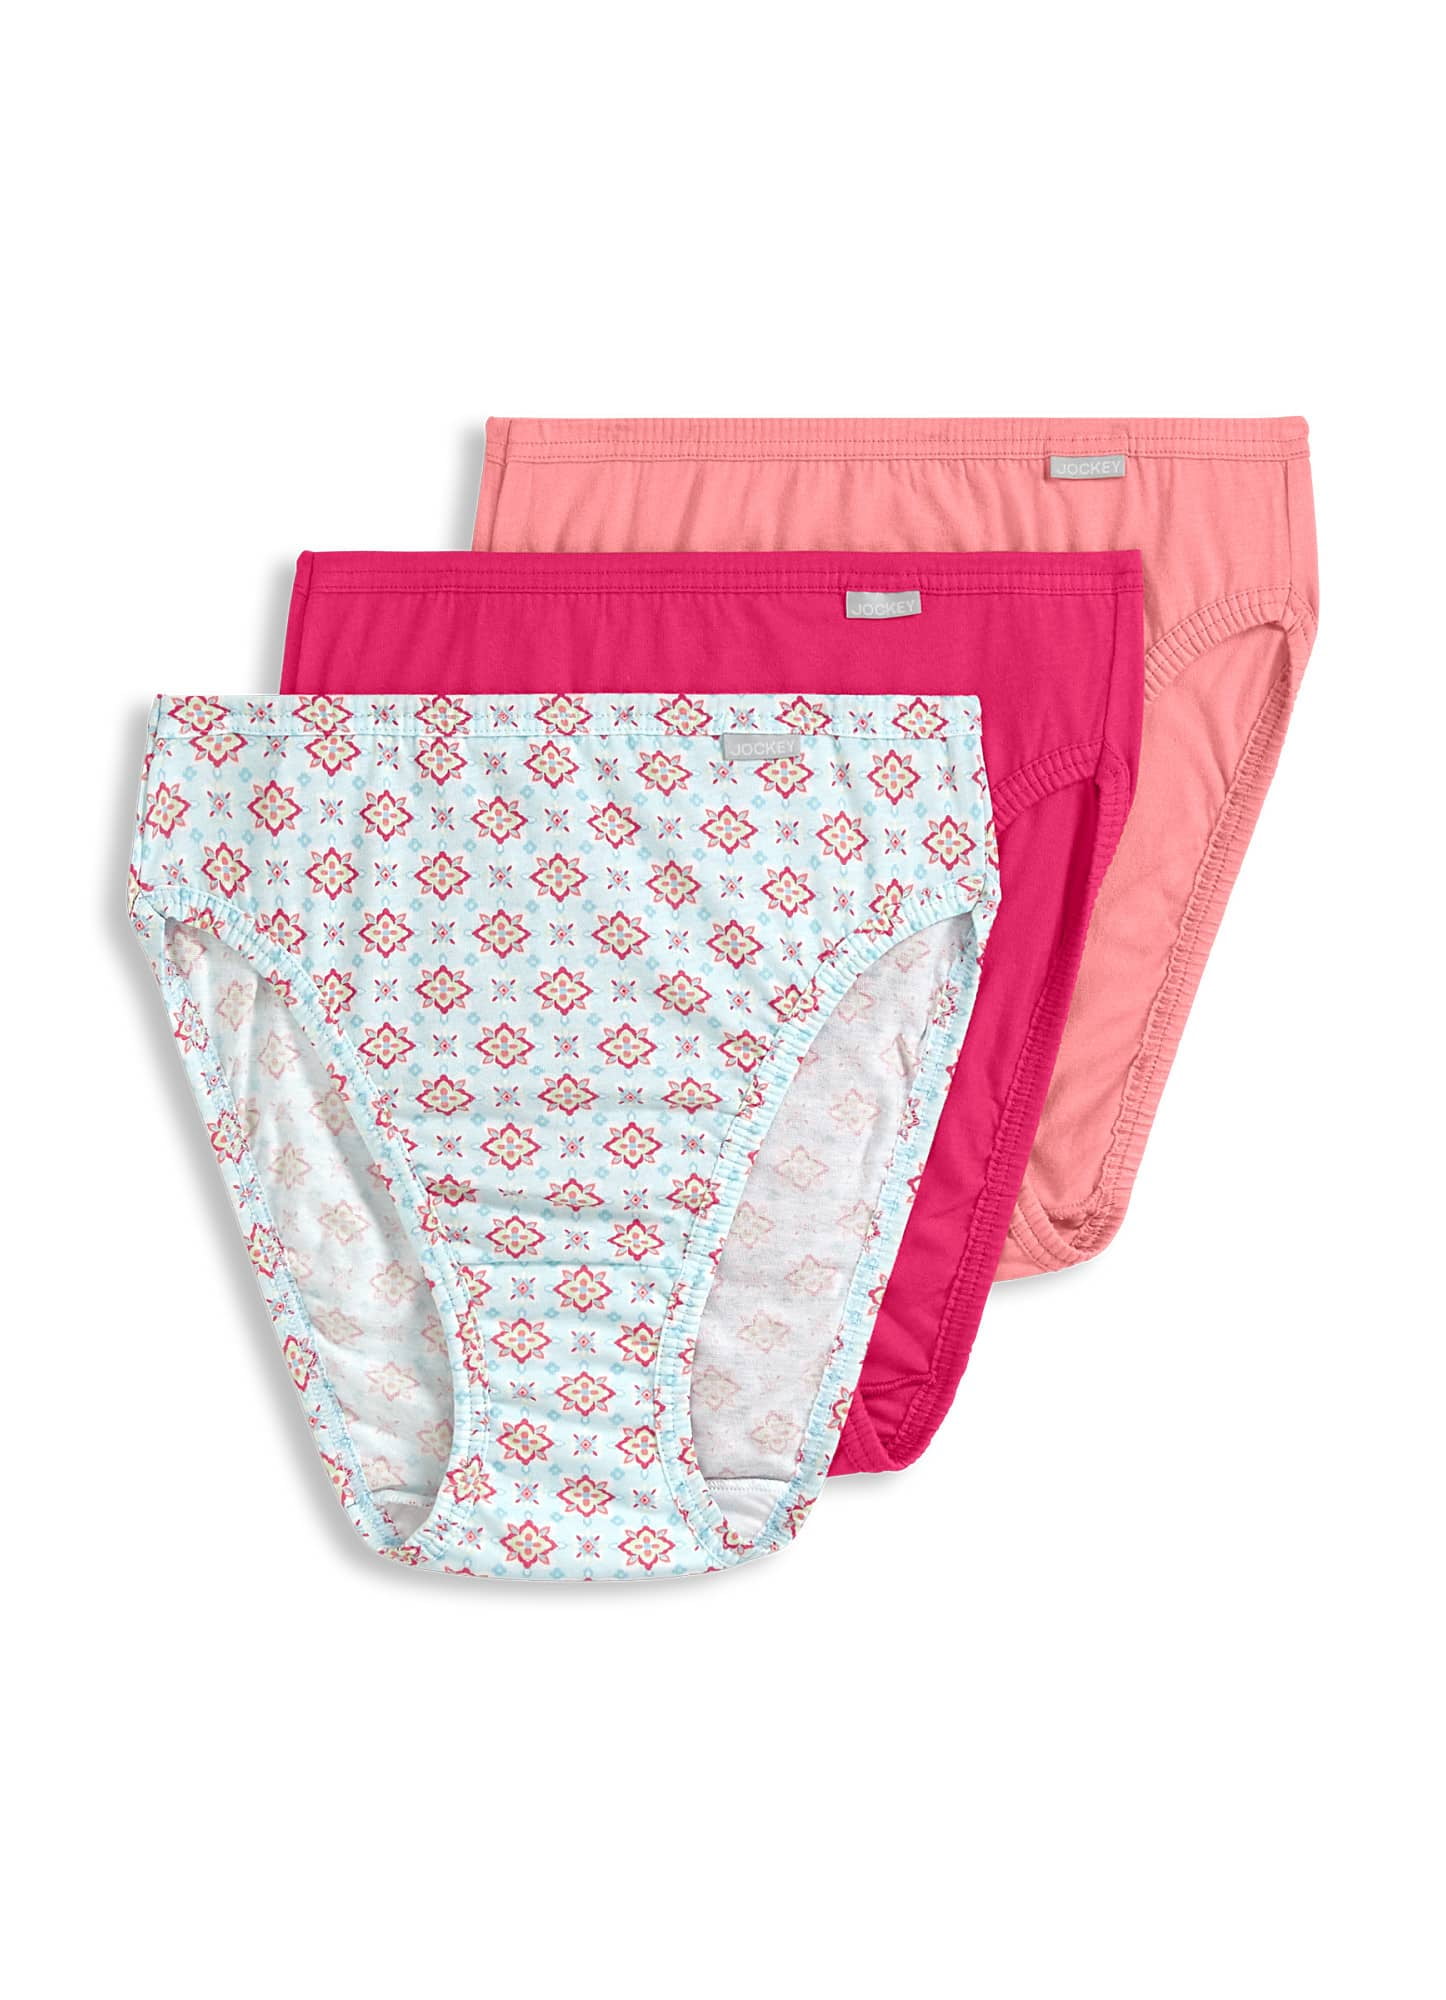 Jockey Womens Plus Size Elance French Cut 3 Pack Underwear Cuts 100% cotton  8 Love Fest/Pink Pearl/Dainty Dot